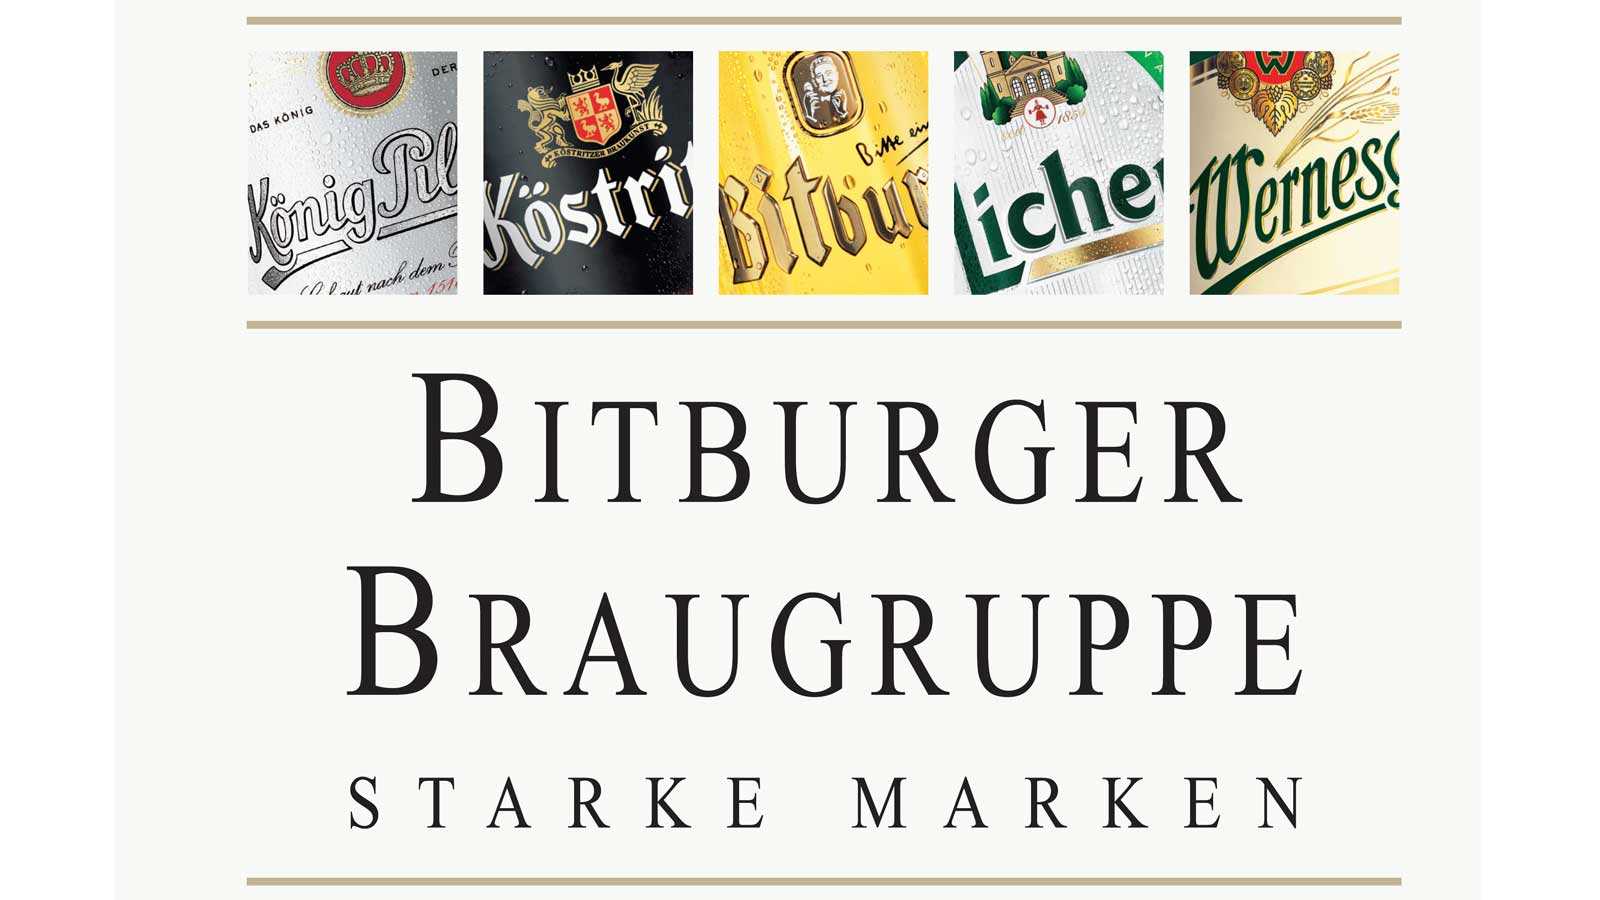 История bitburger braugruppe - onapitkah.info